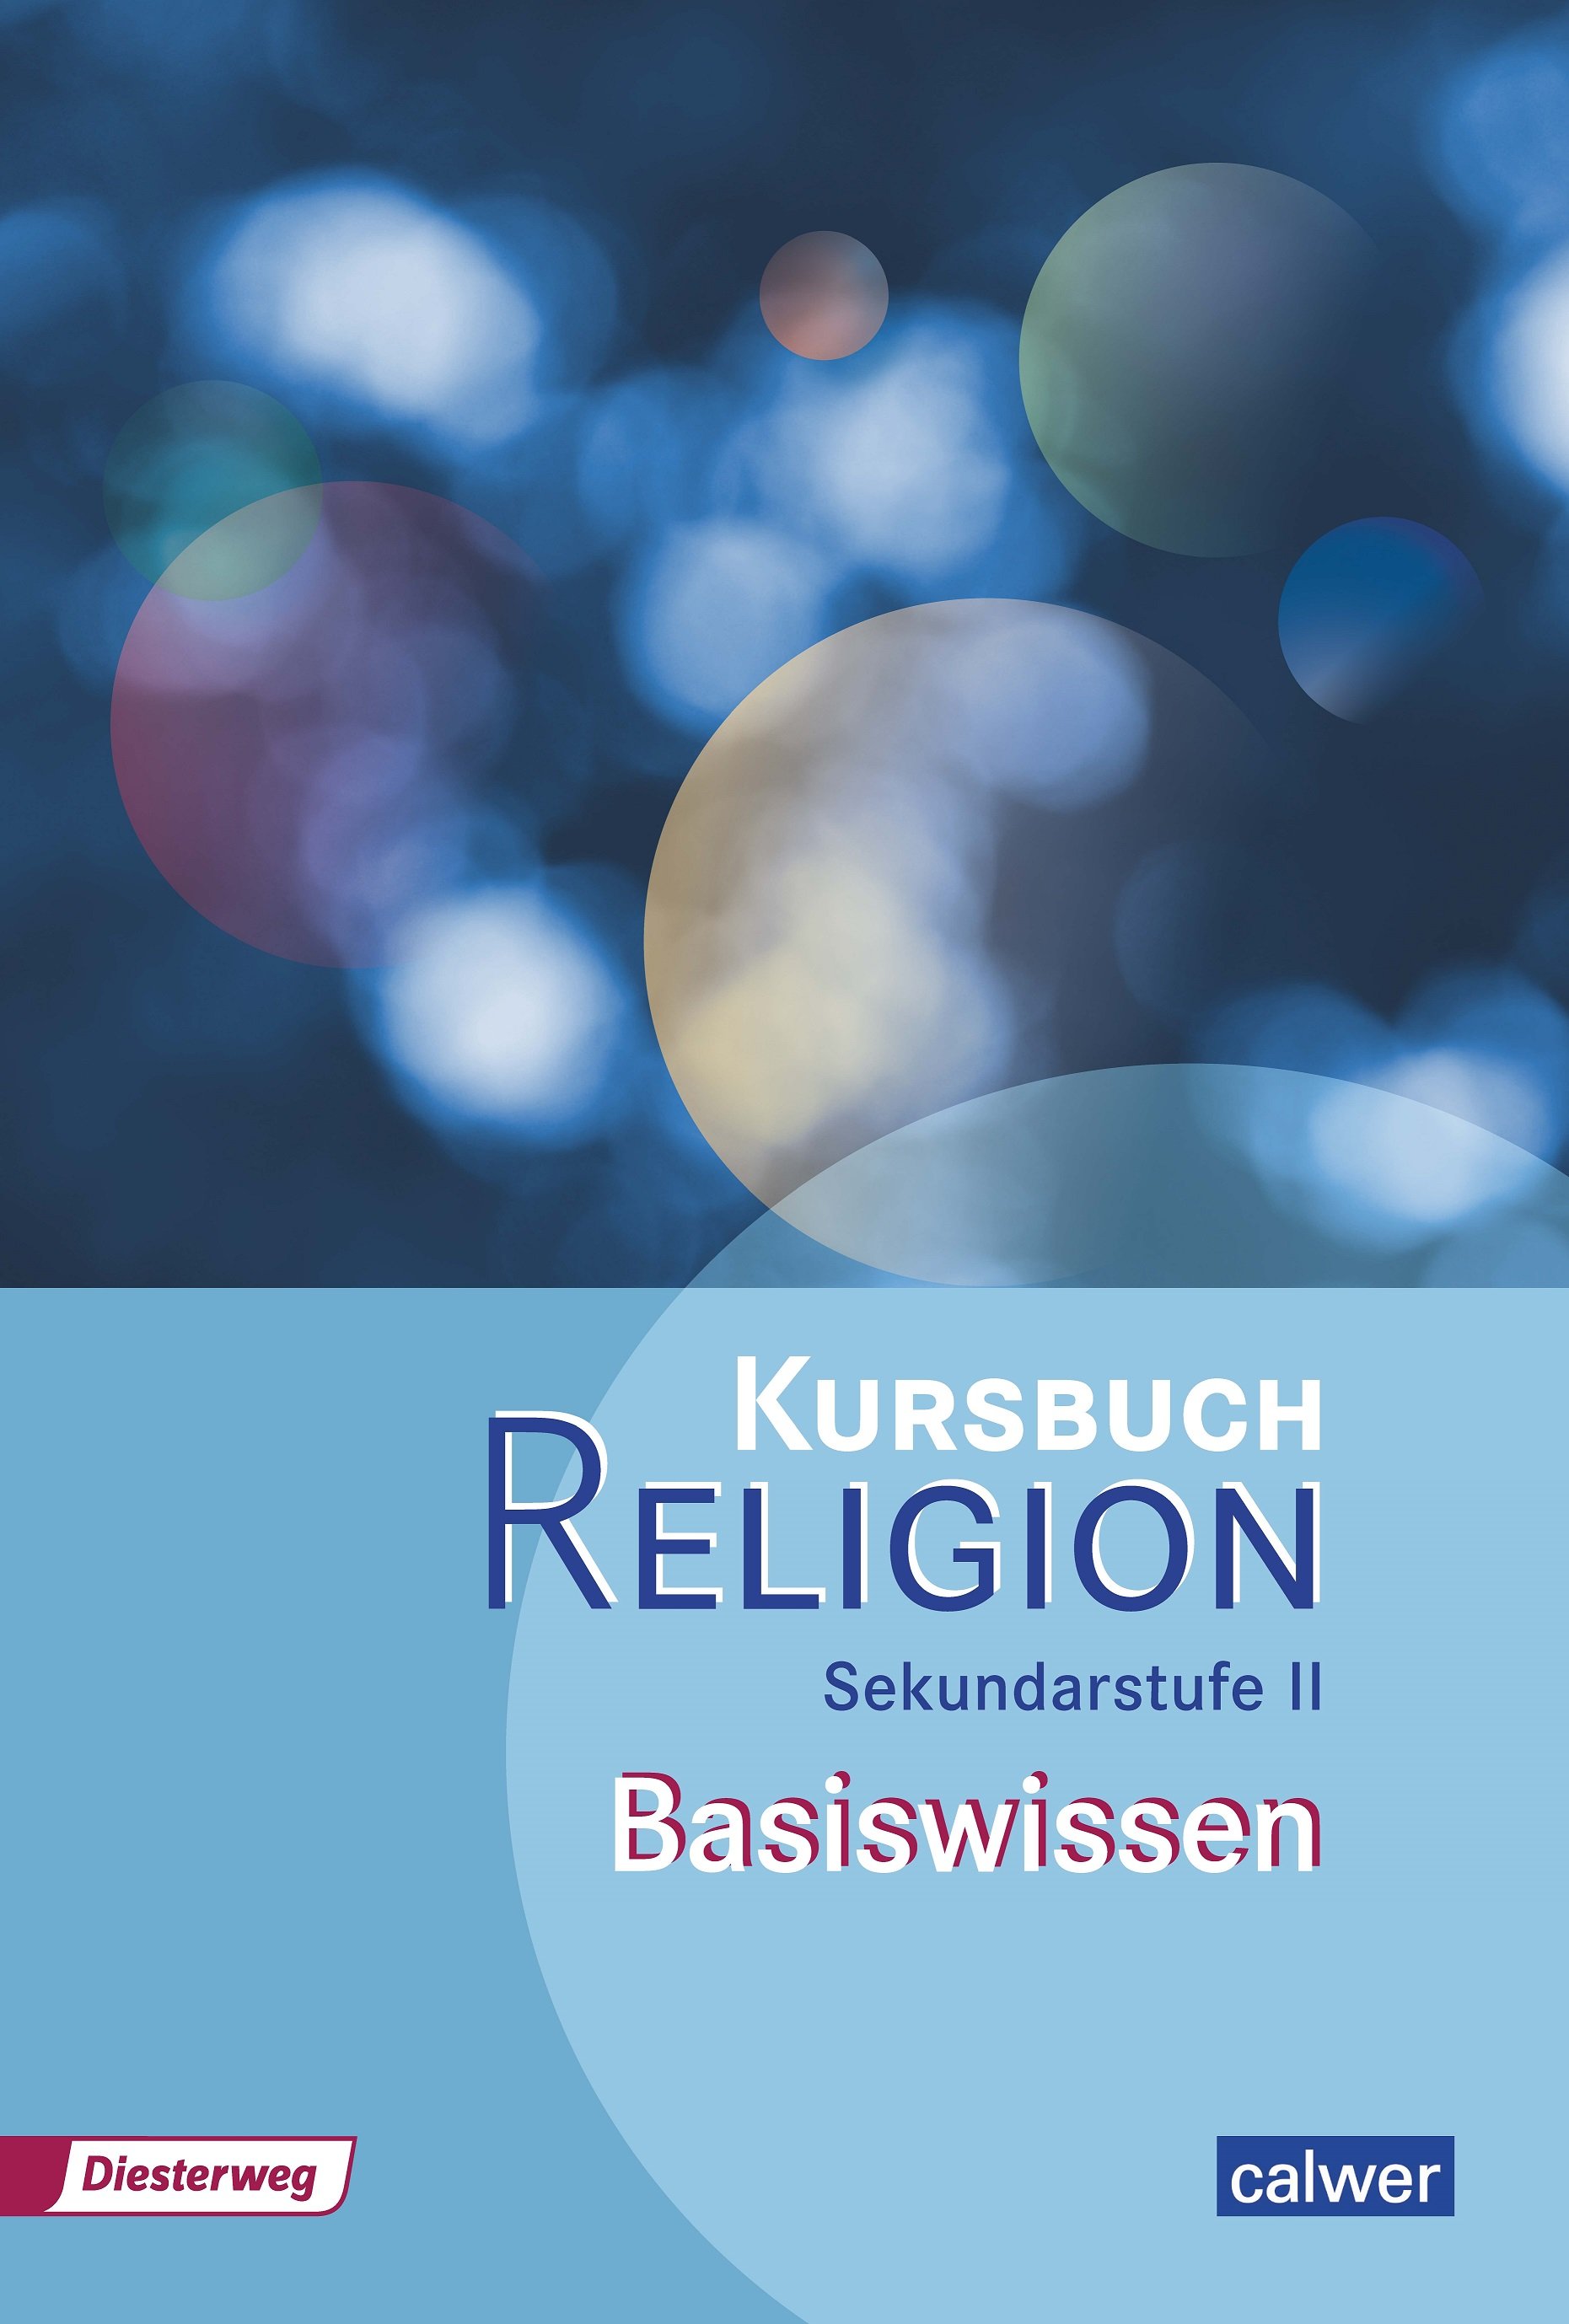 Kursbuch Religion Sekundarstufe II Basiswissen - Cover